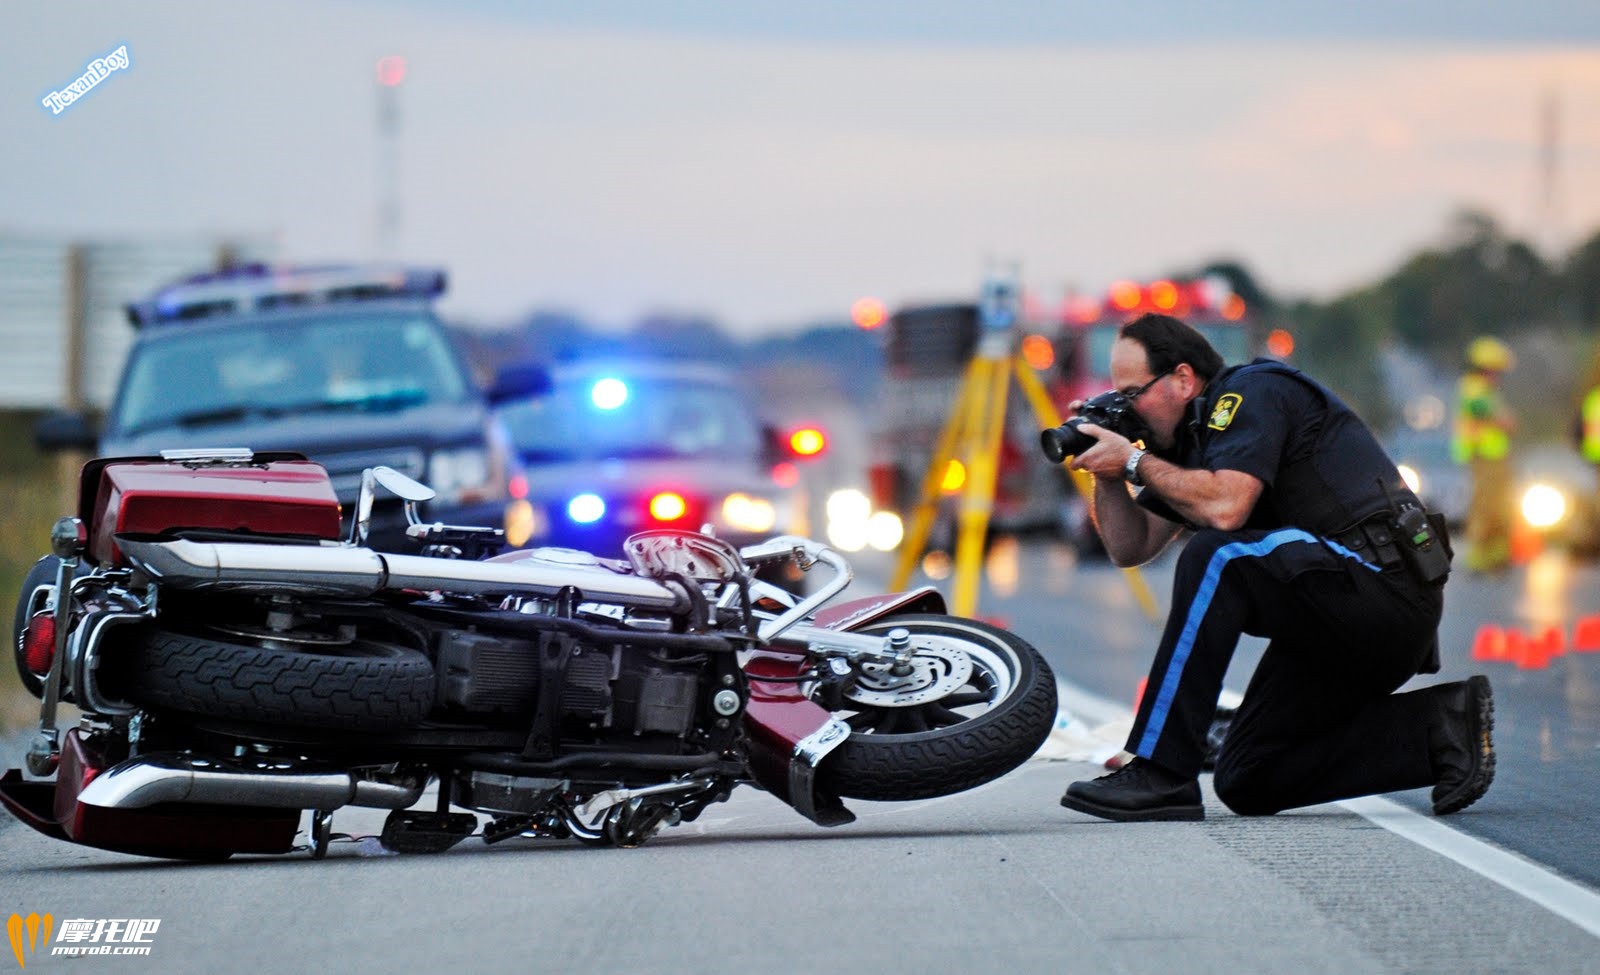 Motorcycle-accident-crash.jpg